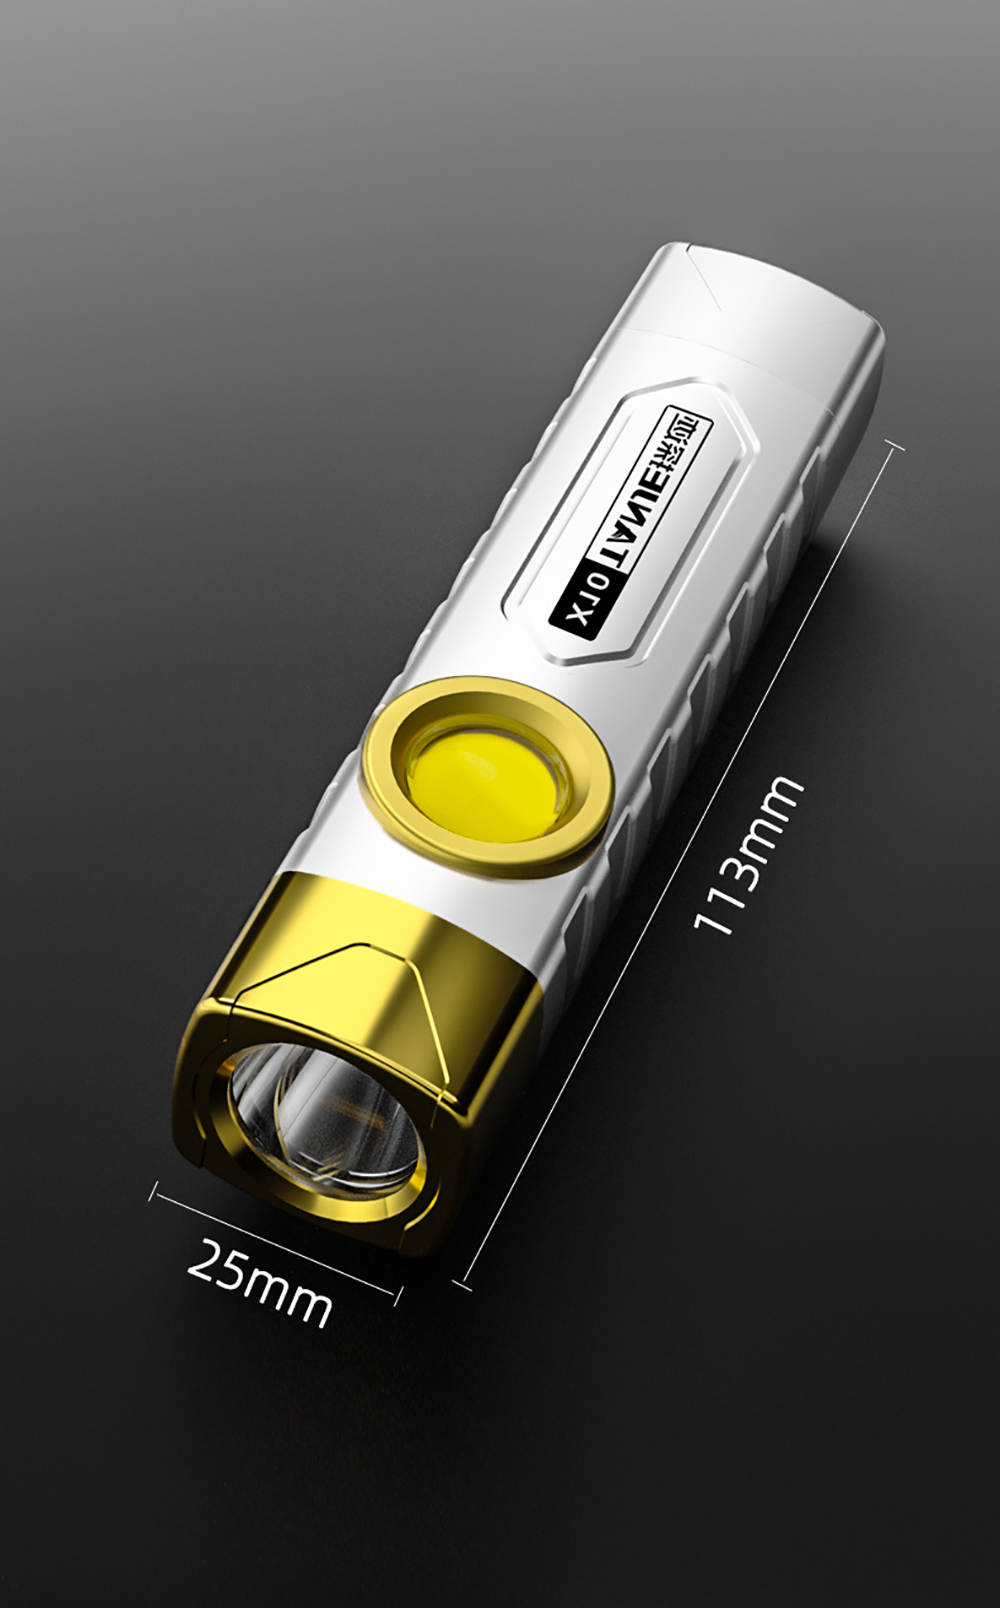 TANJE-X10-T8-2000mAh-USB-Rechargeable-LED-Flashlight-With-Bright-COB-Side-Light-IPX6-Waterproof-Port-1950739-10